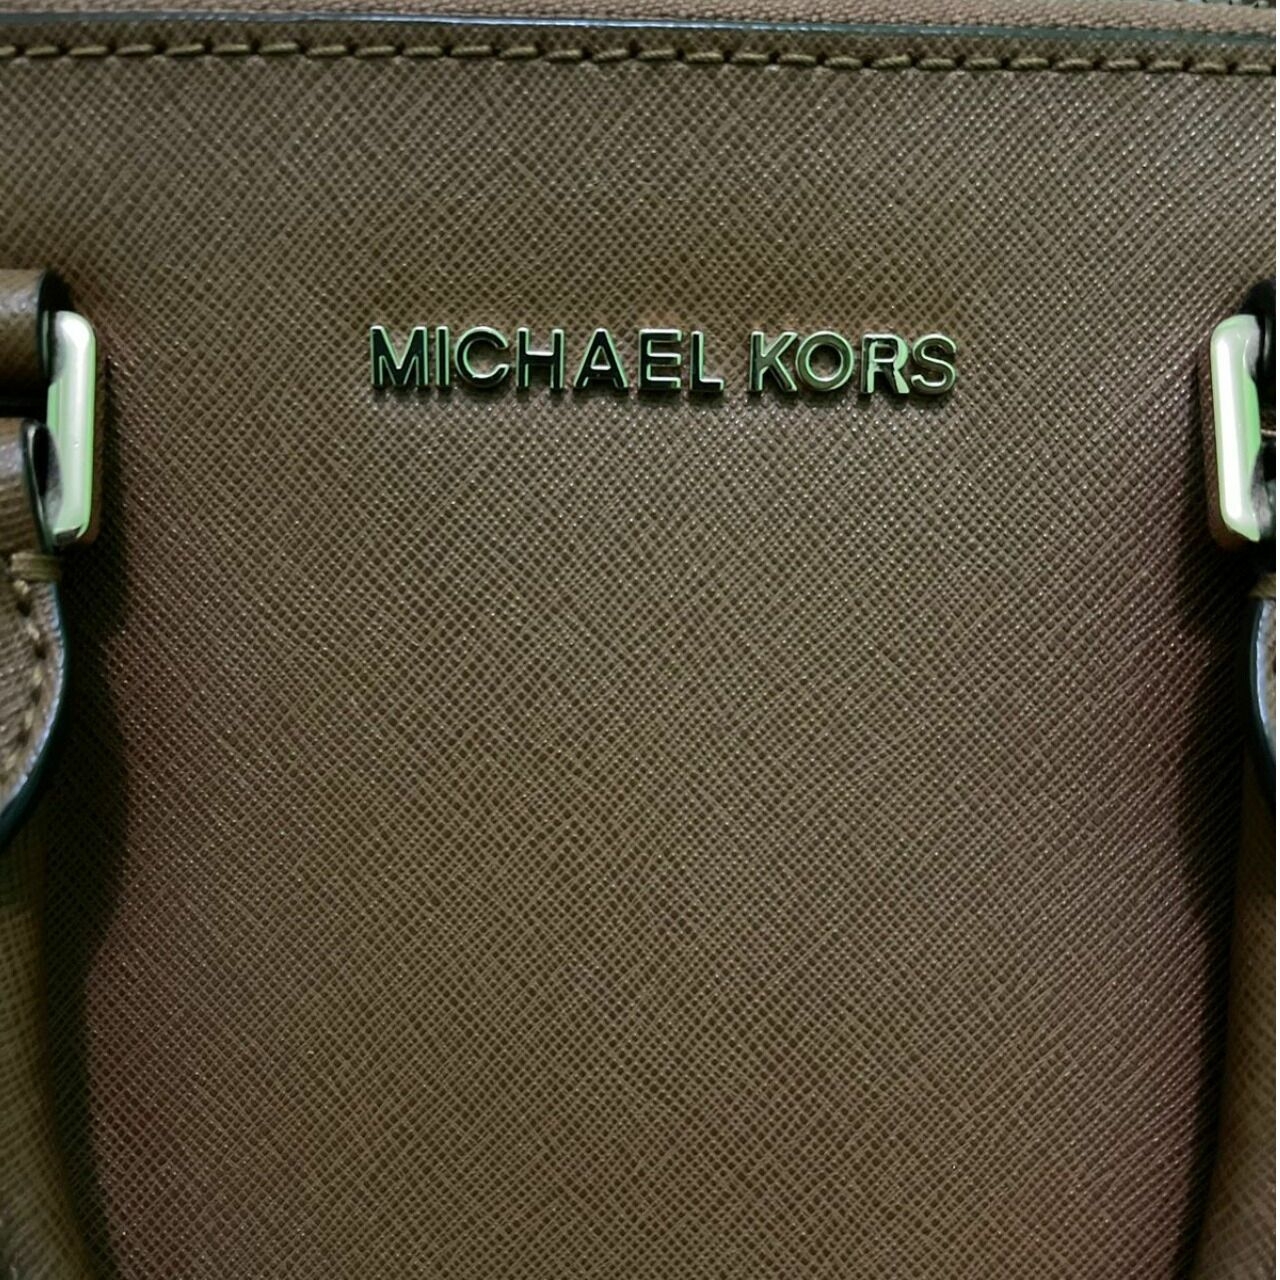 Michael Kors Brown Satchel Bag